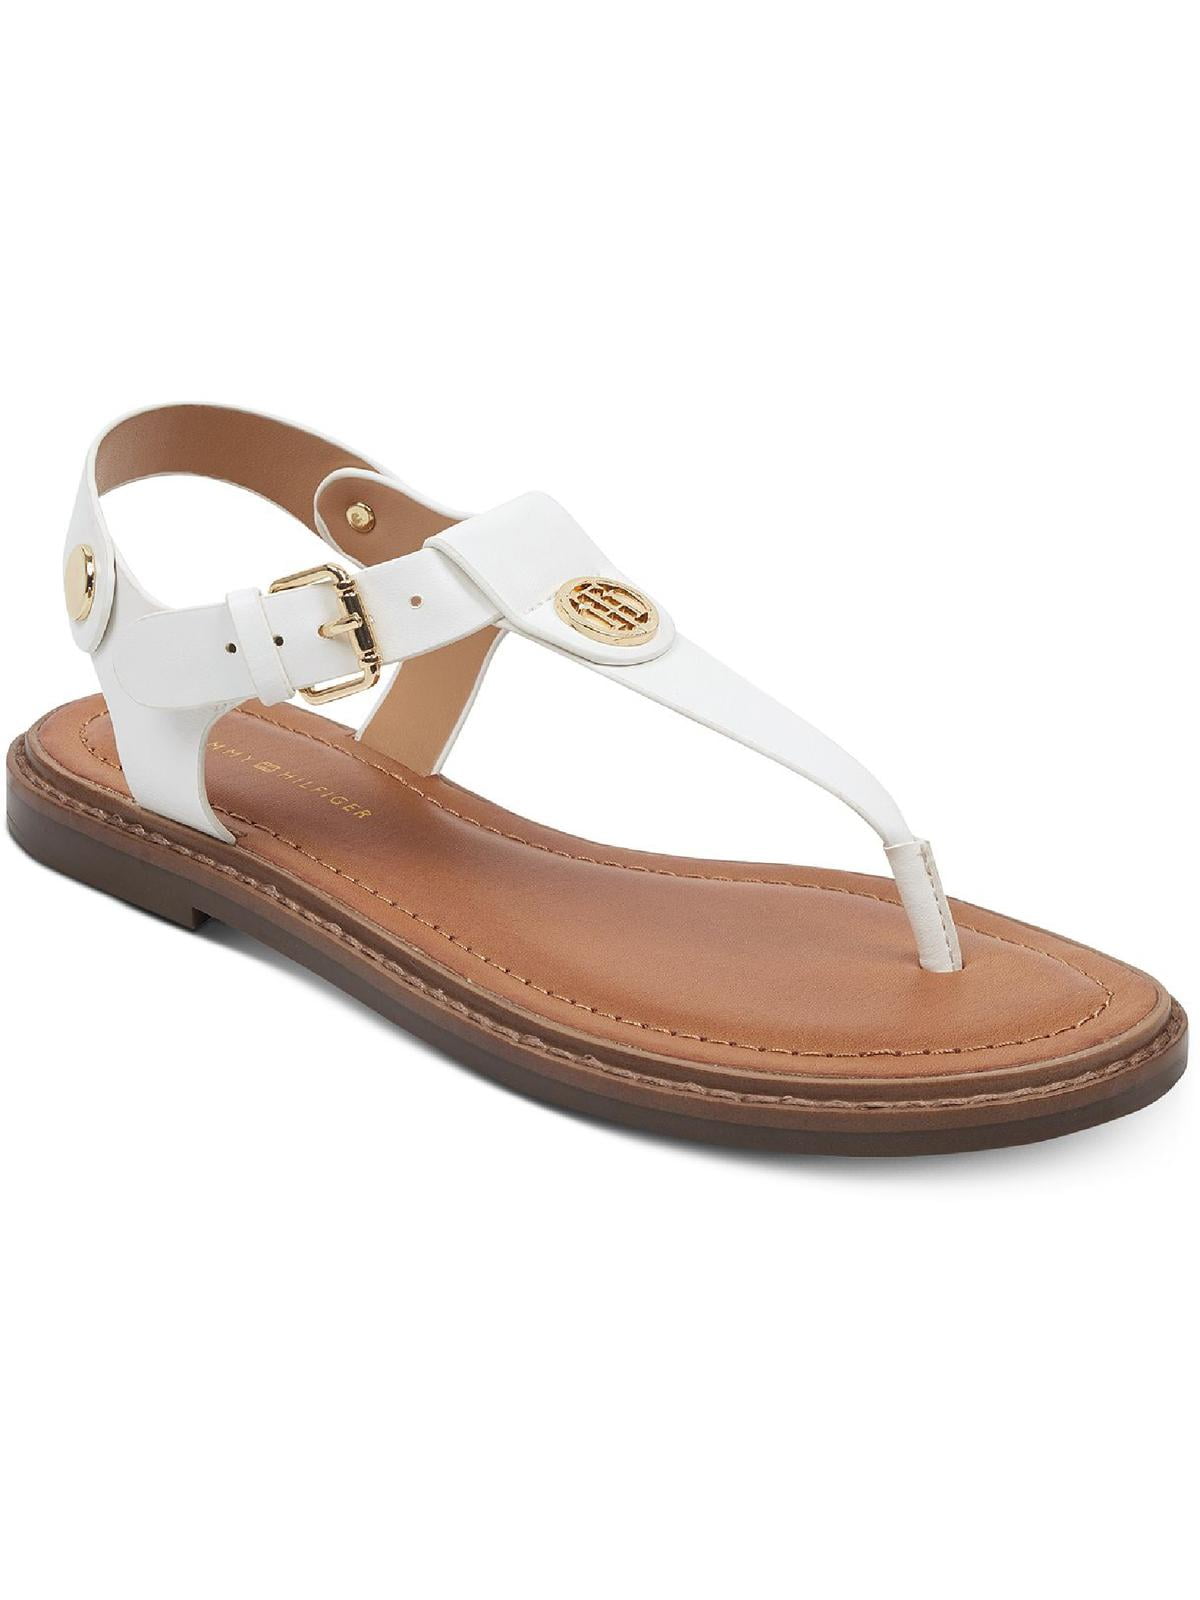 Tommy Hilfiger Womens Bennia Leather Thong Sandals 7 Medium (B,M) -